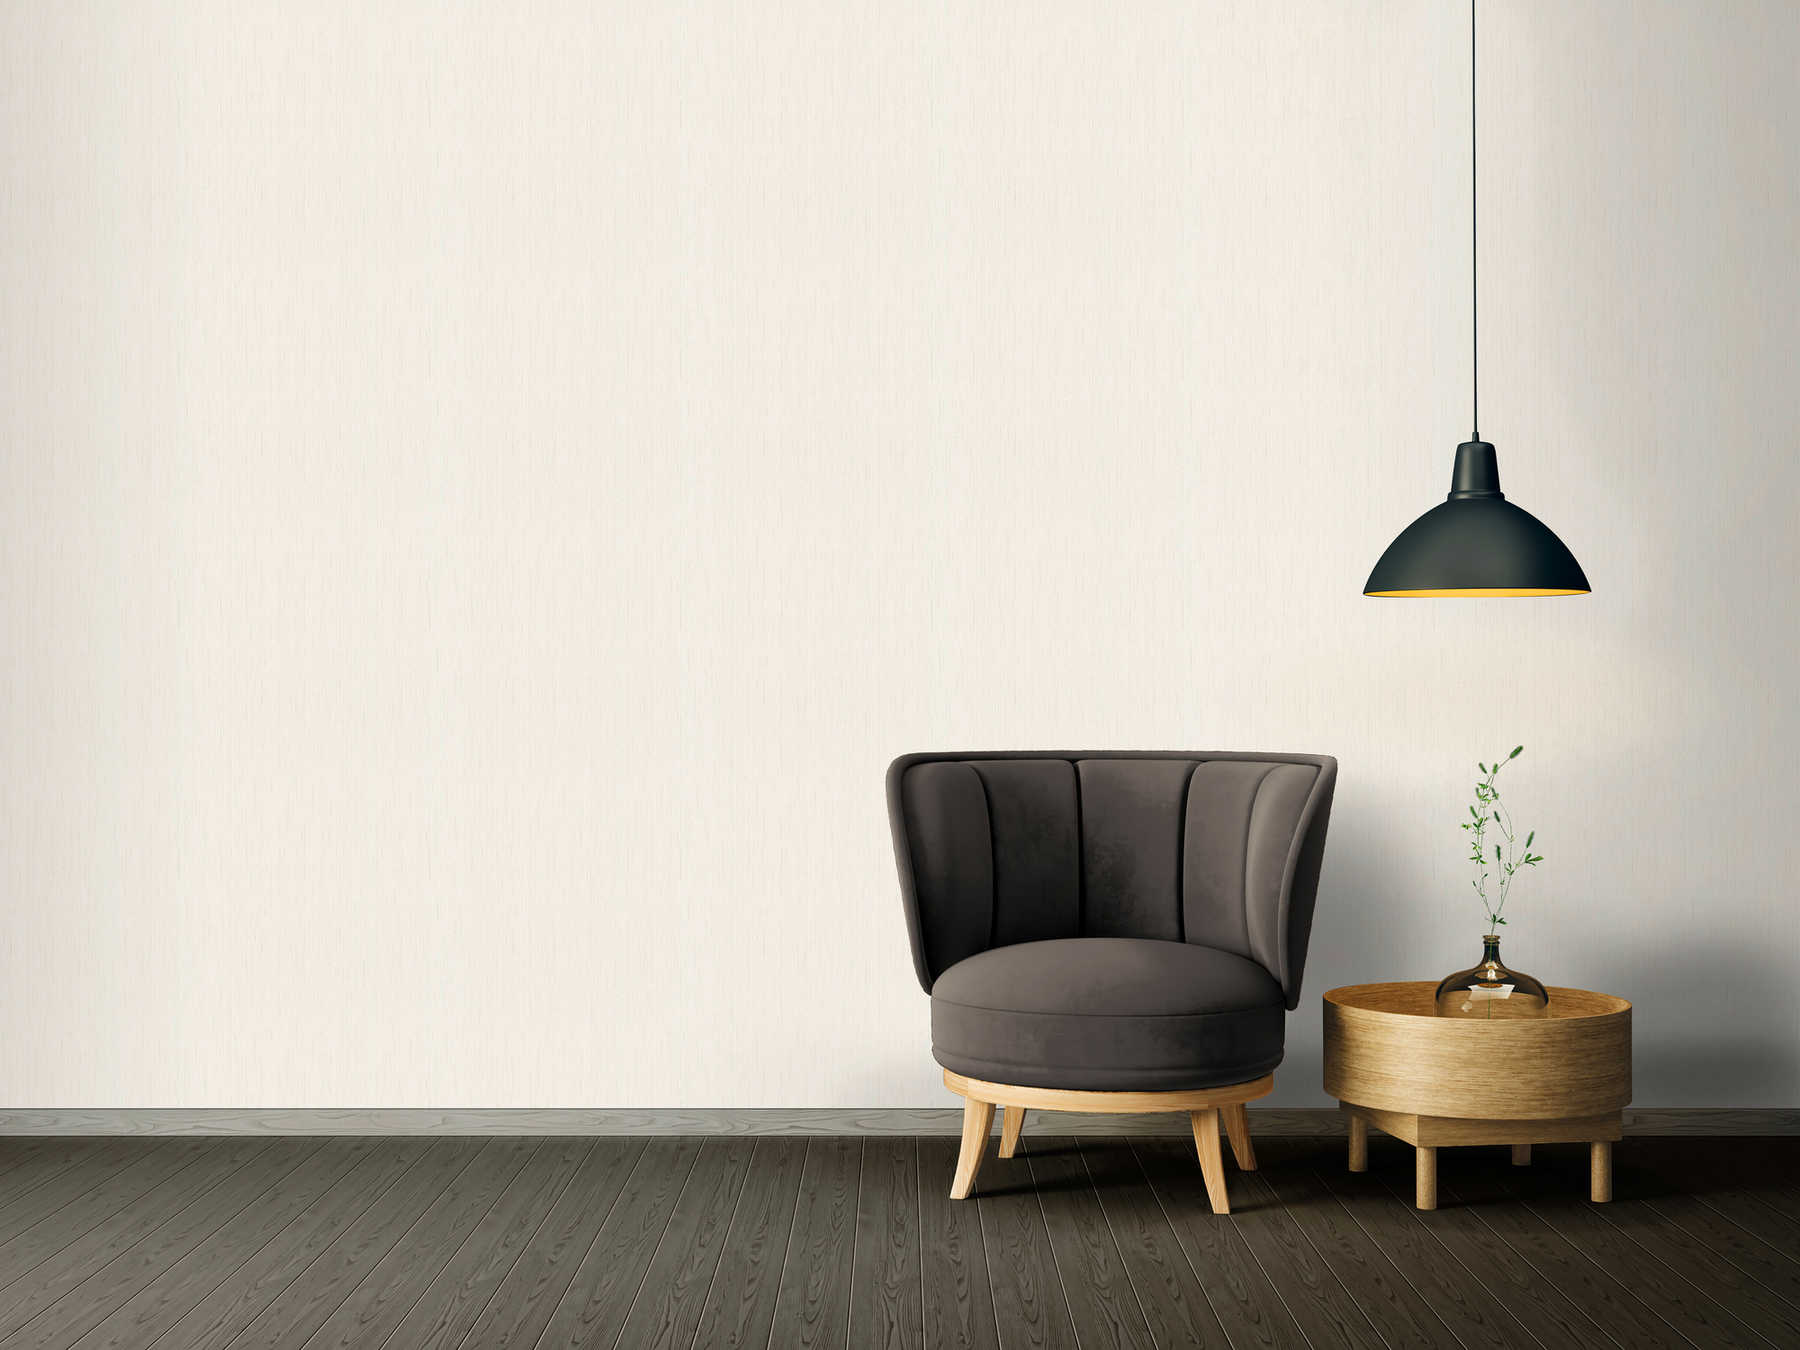             Retro wallpaper with subtle pattern in fabric texture - cream
        